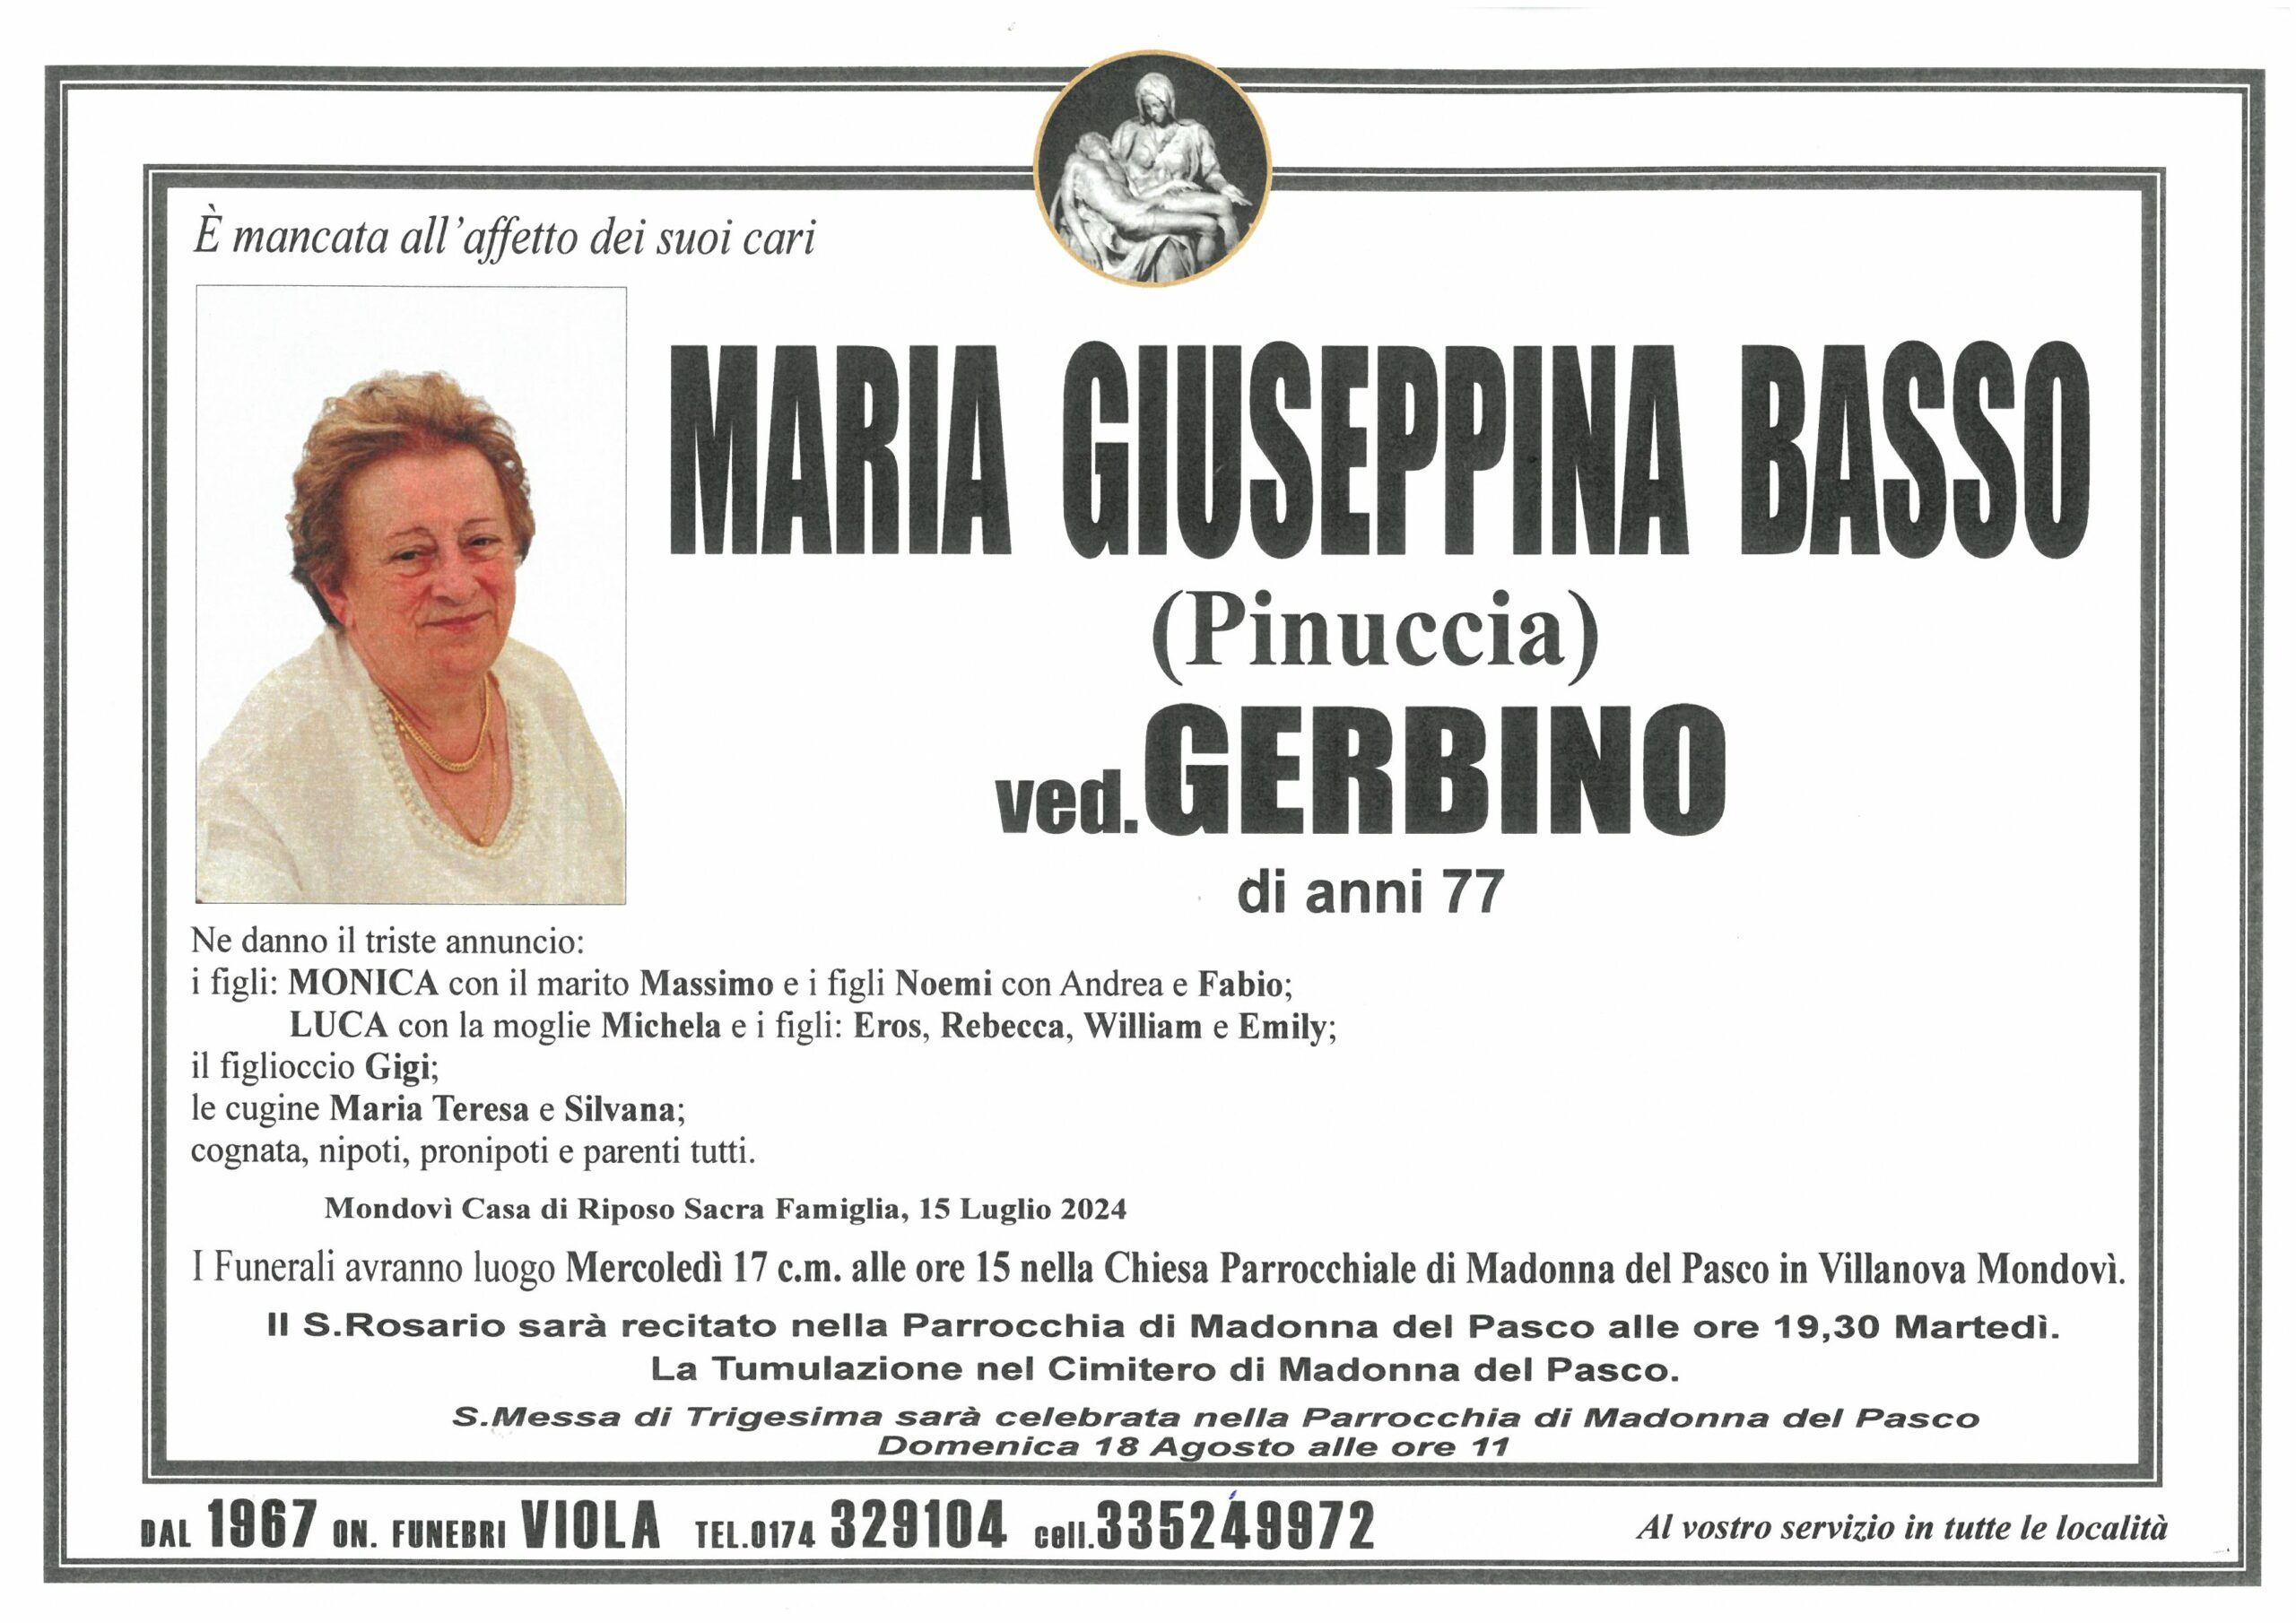 MARIA GIUSEPPINA BASSO